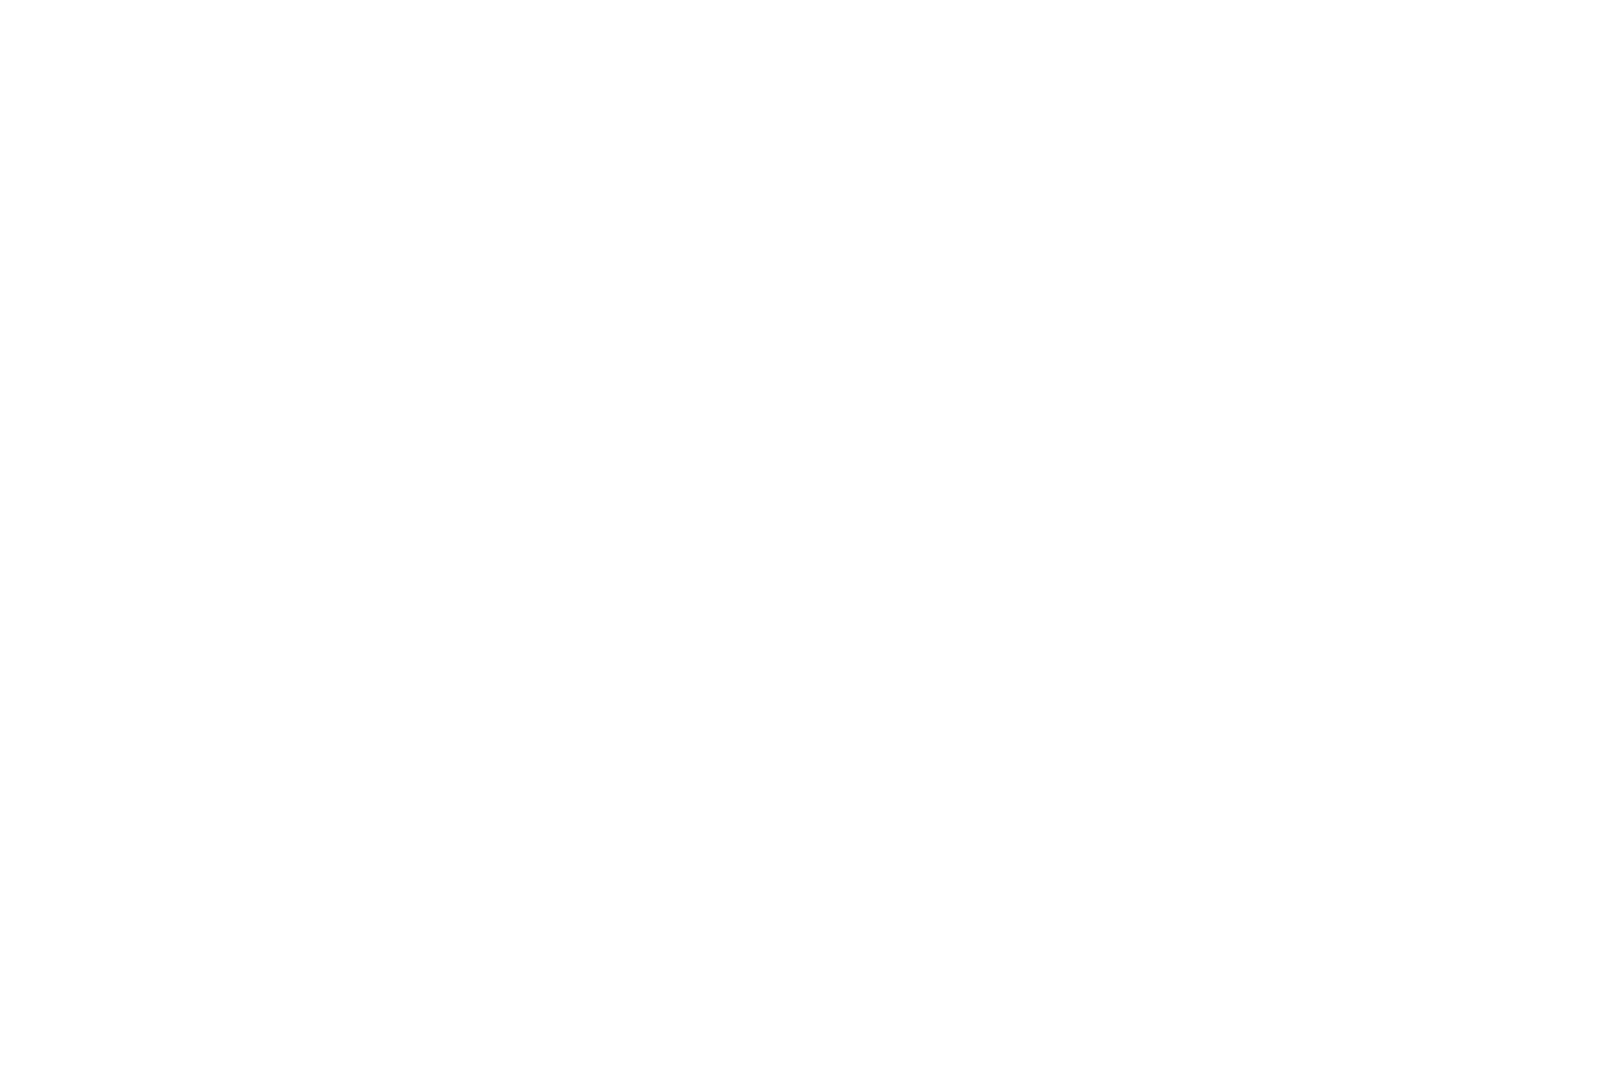 SKY-HI日高光啓、w-inds.橘慶太が深夜のFMヨコハマで音楽制作への情熱を語るスペシャル番組O.A.サムネイル画像!